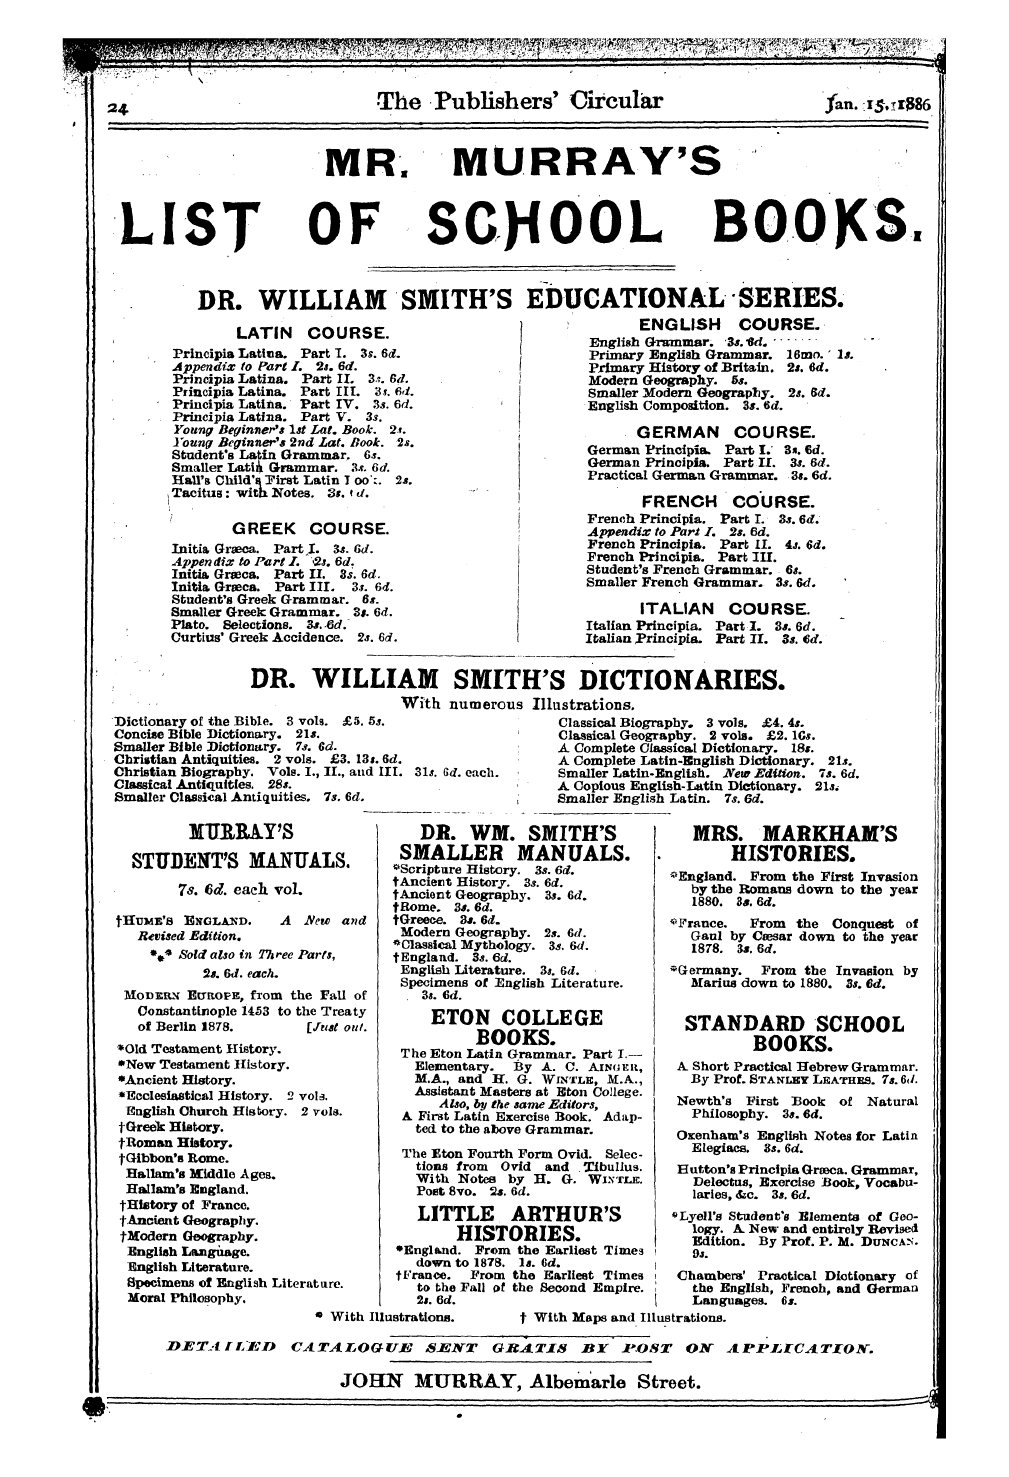 Publishers’ Circular (1880-1890): jS F Y, 1st edition - Mr. Murray's List Of School Books.